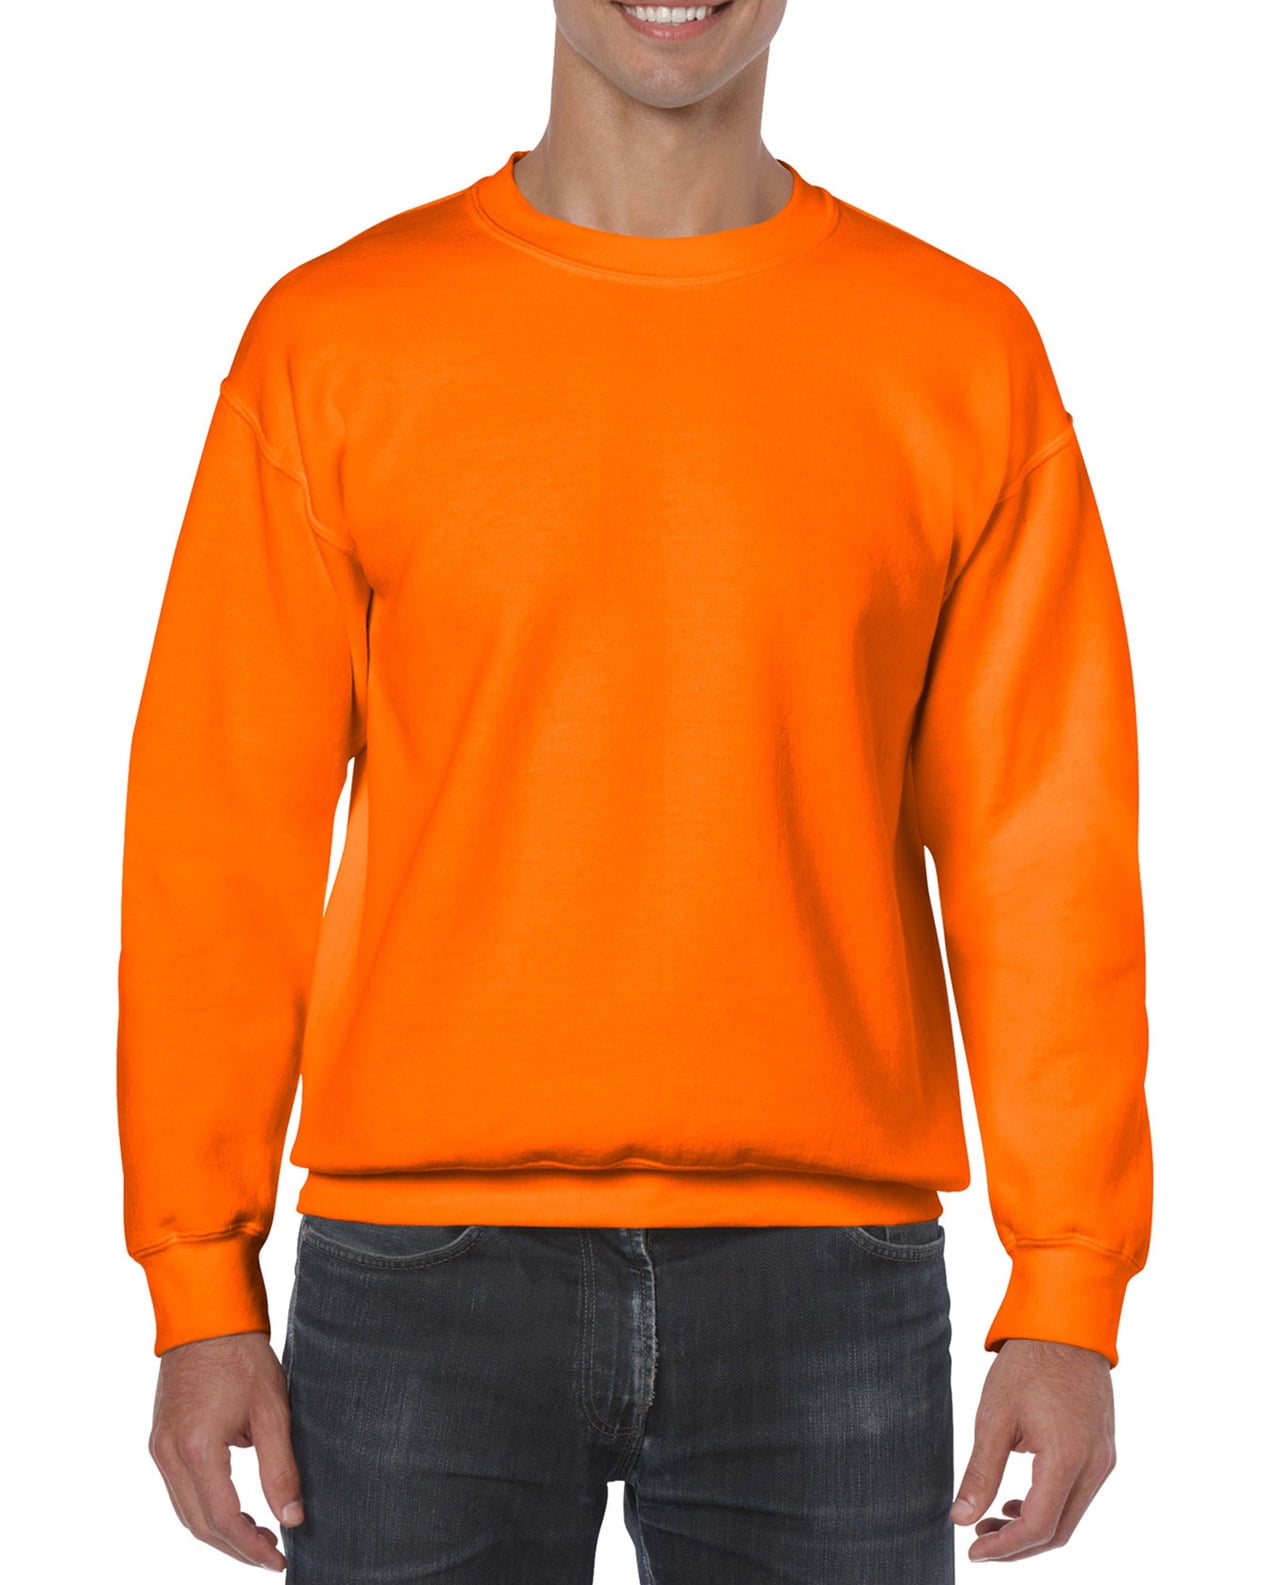 Orange Sweatshirt Orange Sweater Orange Hoodie for Thanksgiving